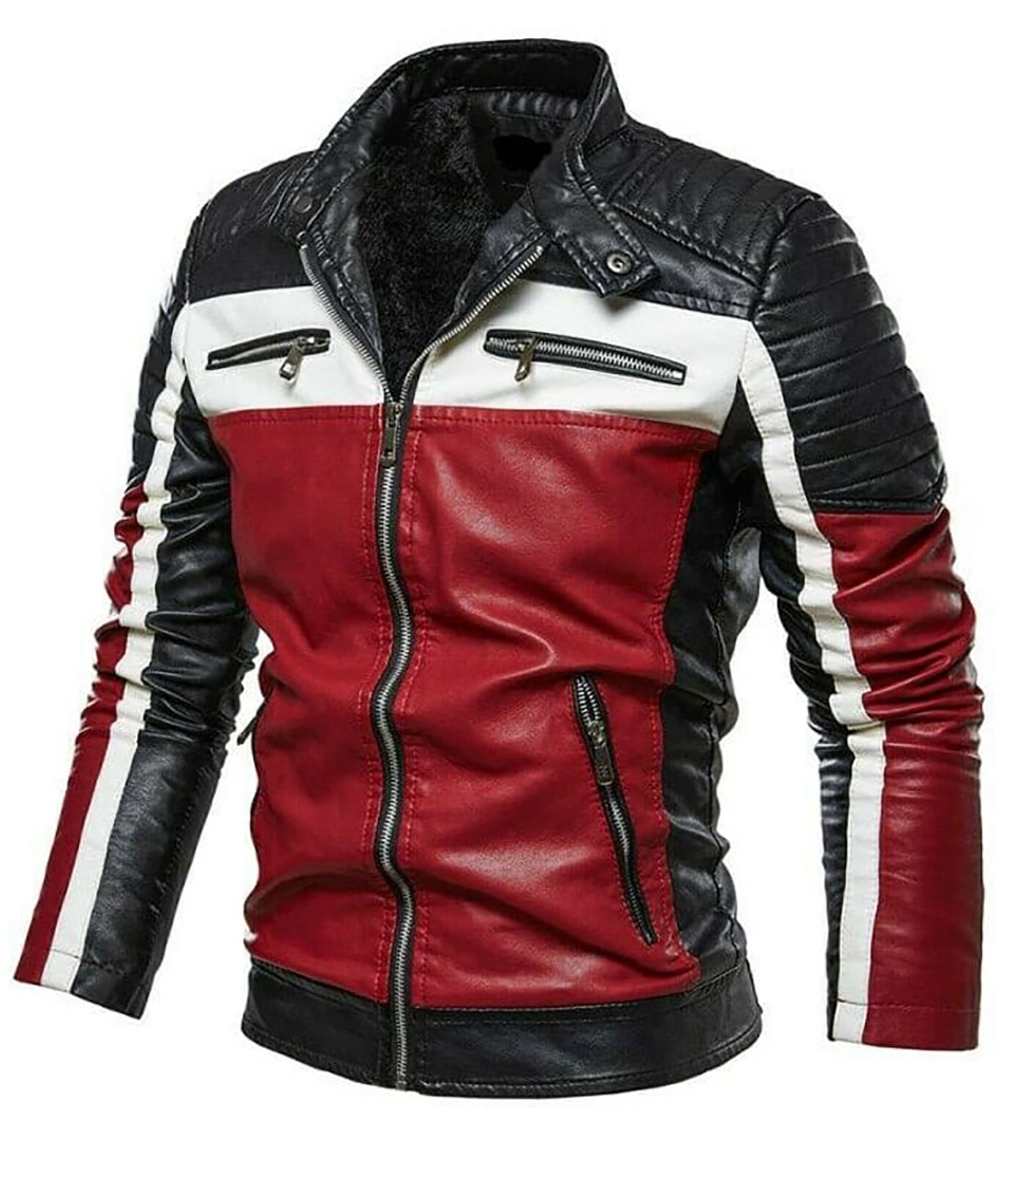 Men’s Motorcycle Leather Jacket (1)